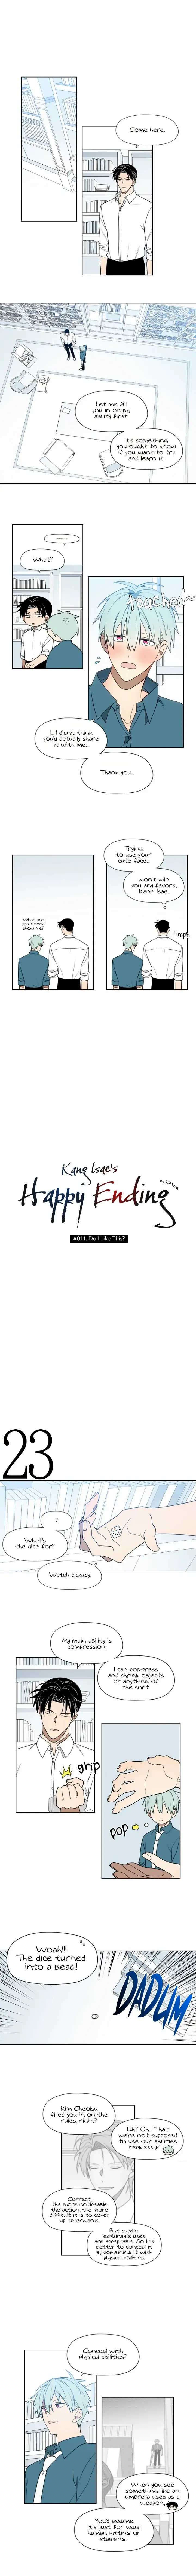 Kang Isae's Happy Ending - chapter 11 - #1